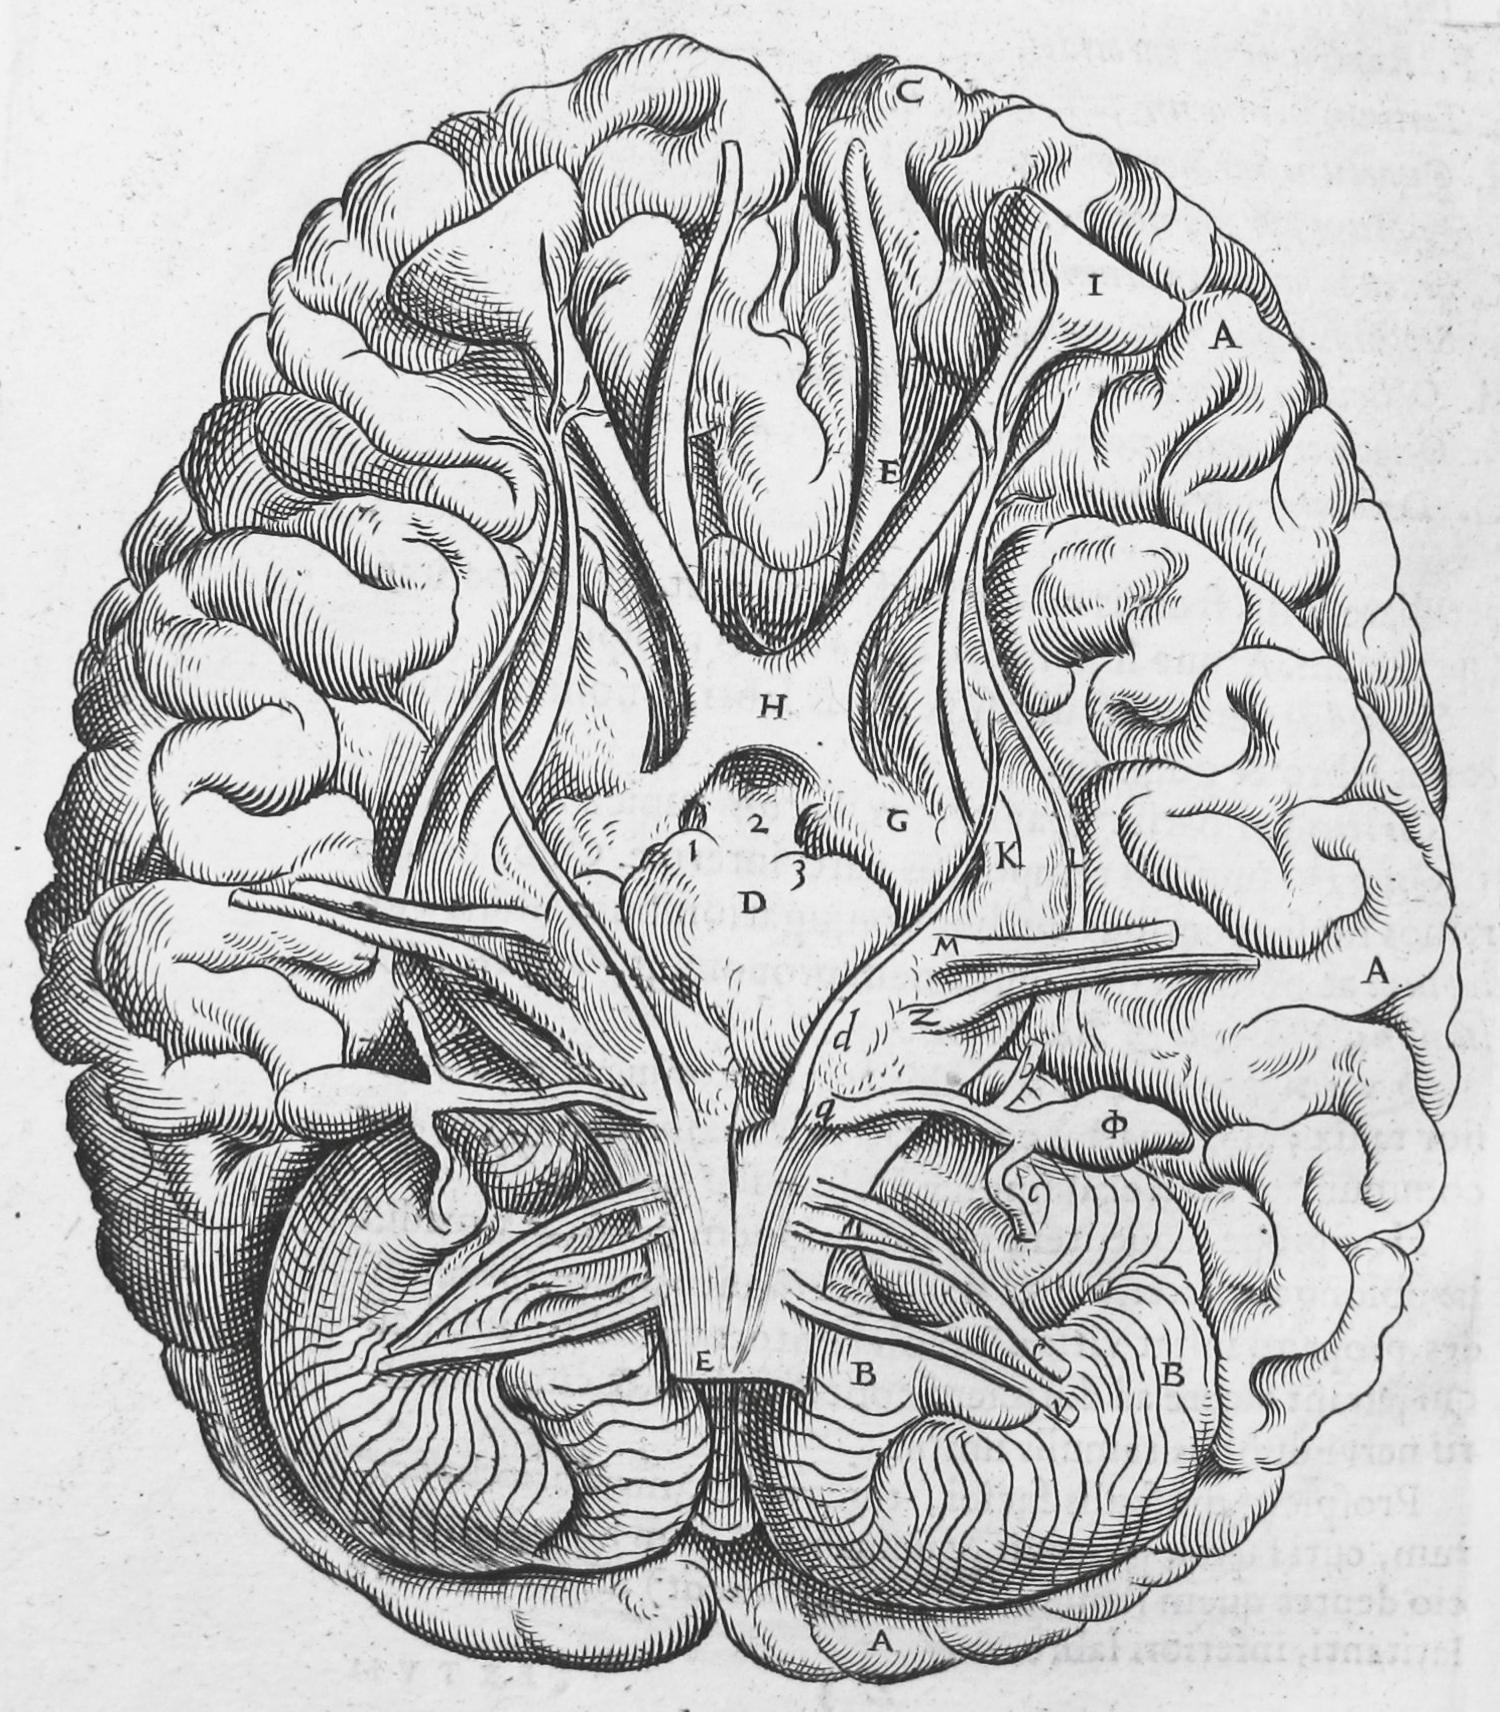 eFigure 33.2, Woodcut of cranial nerves.